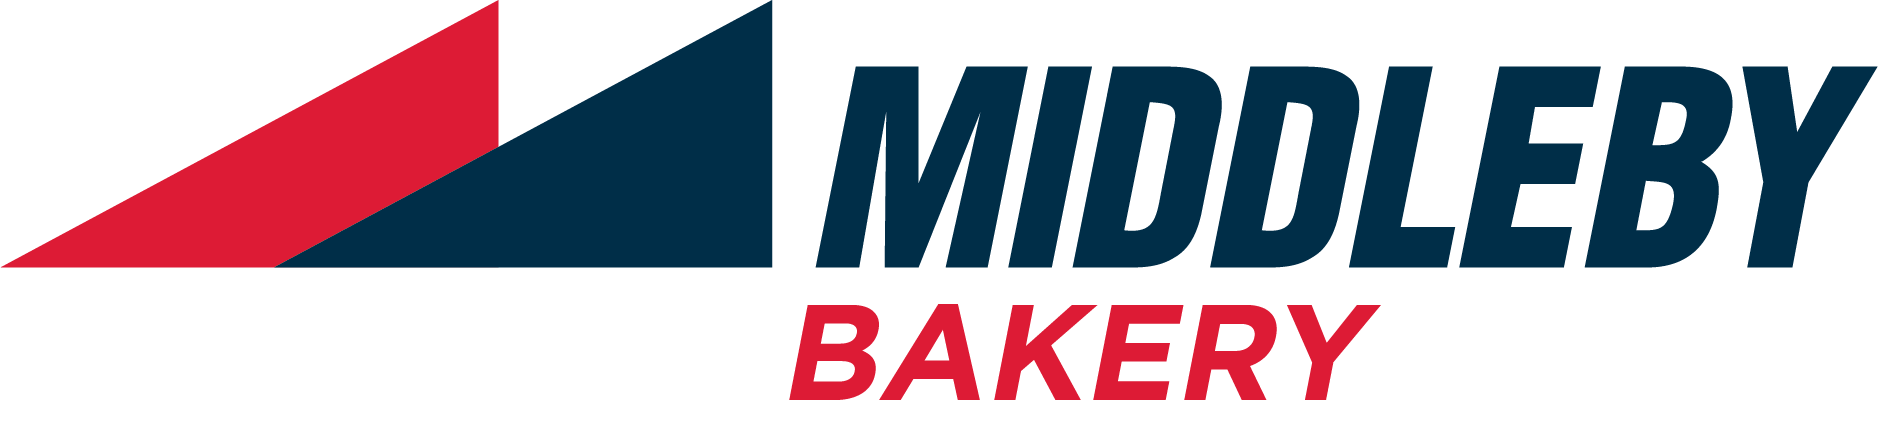 Middleby Bakery Group Logo